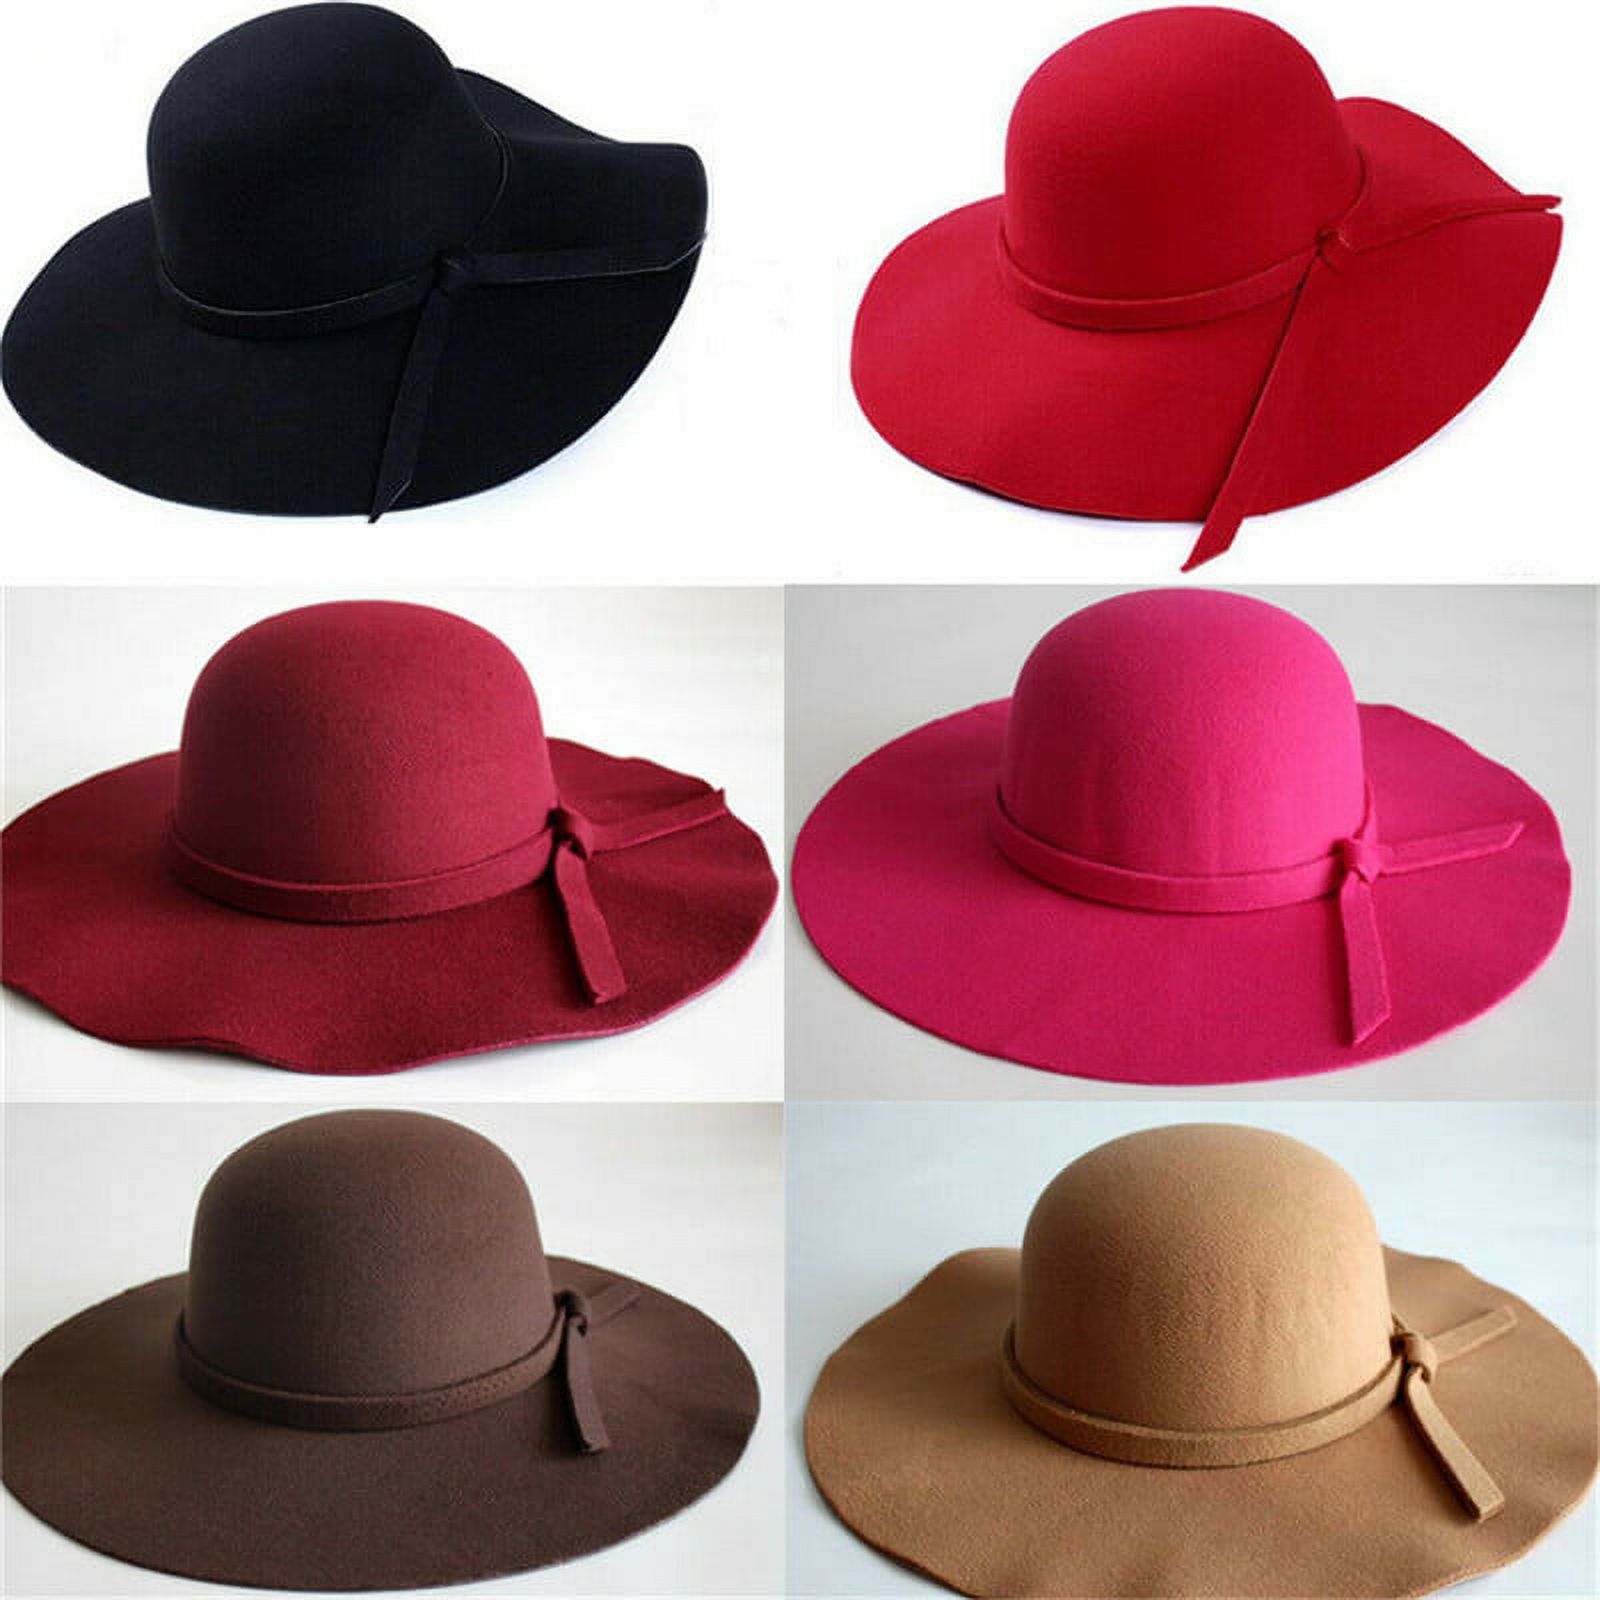 Puloru Elegant Wide Brim Sun Hat Bowler Hats Retro Ladies Wool Floppy Felt Fedora Hat - image 3 of 5